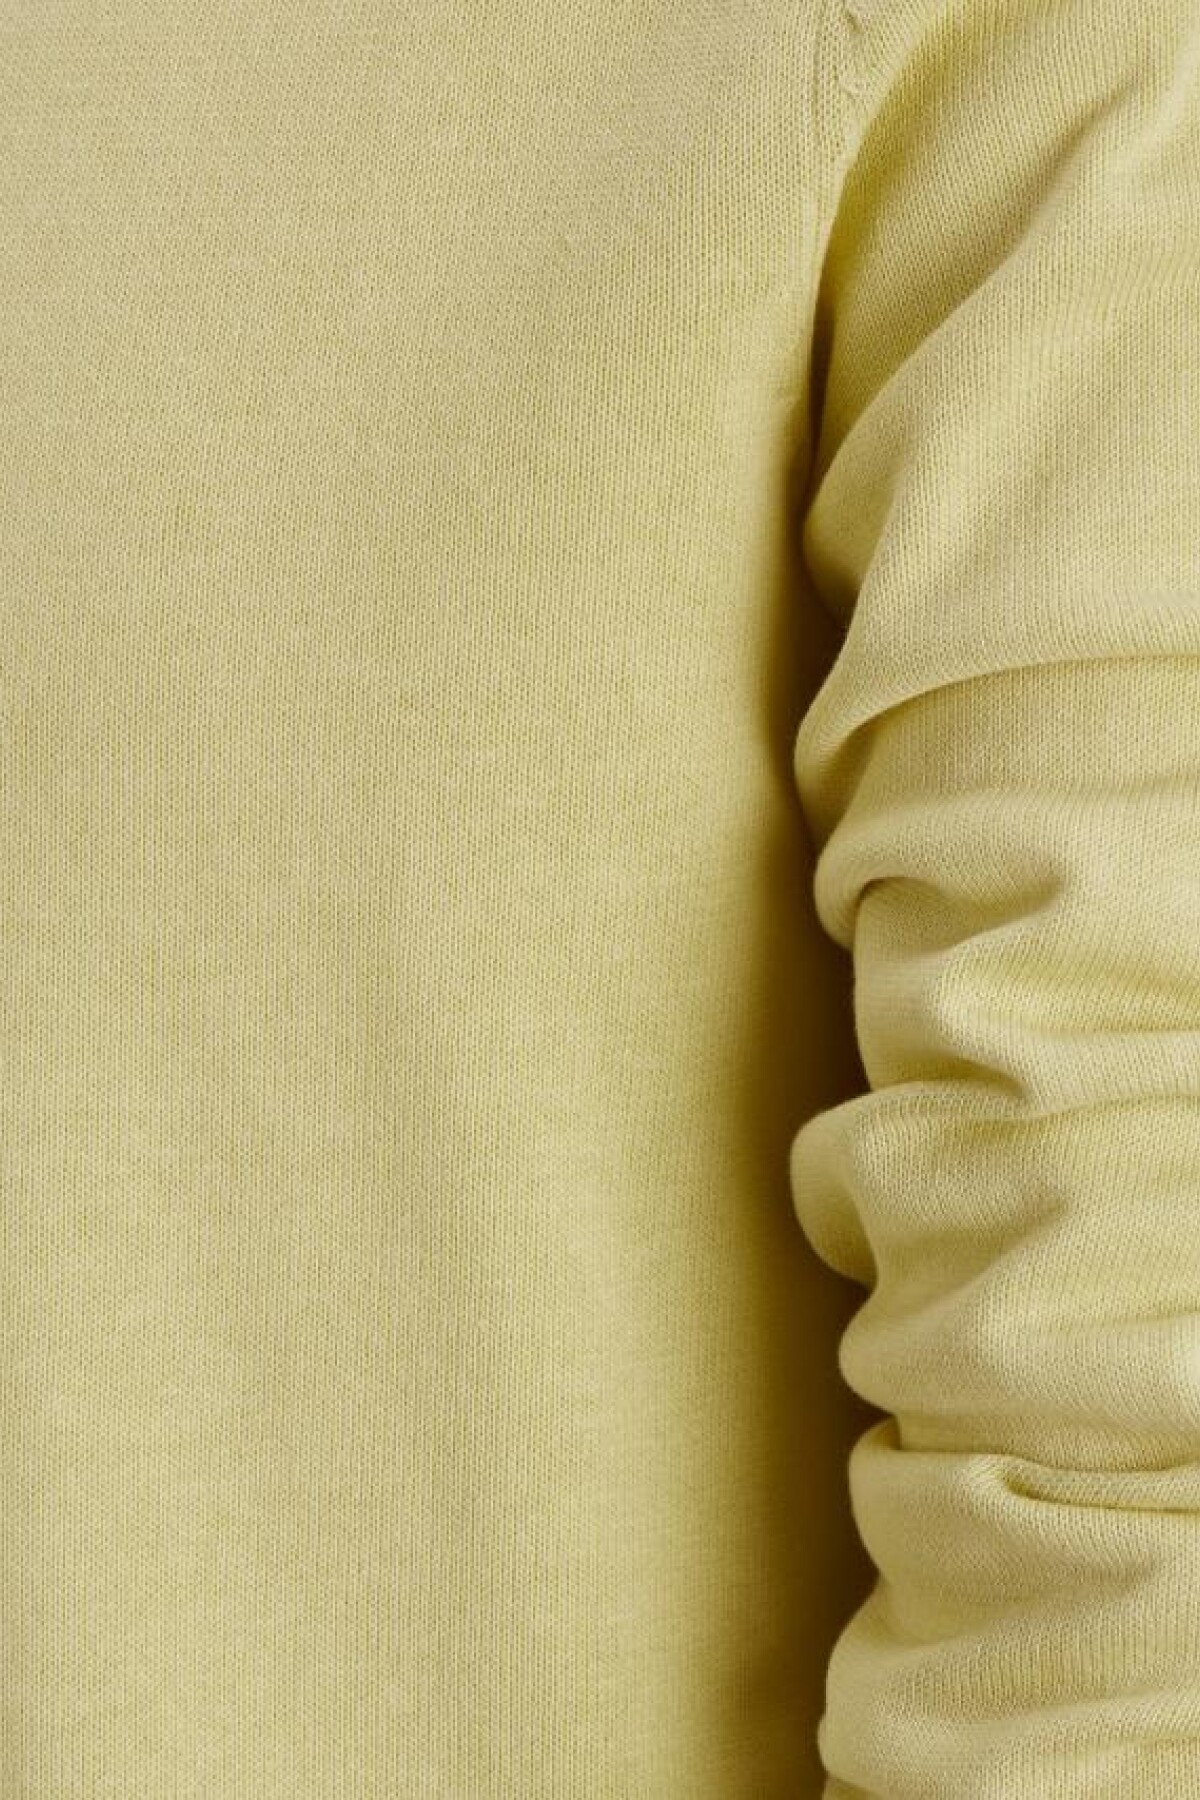 Sweater Leo Ligero Golden Mist